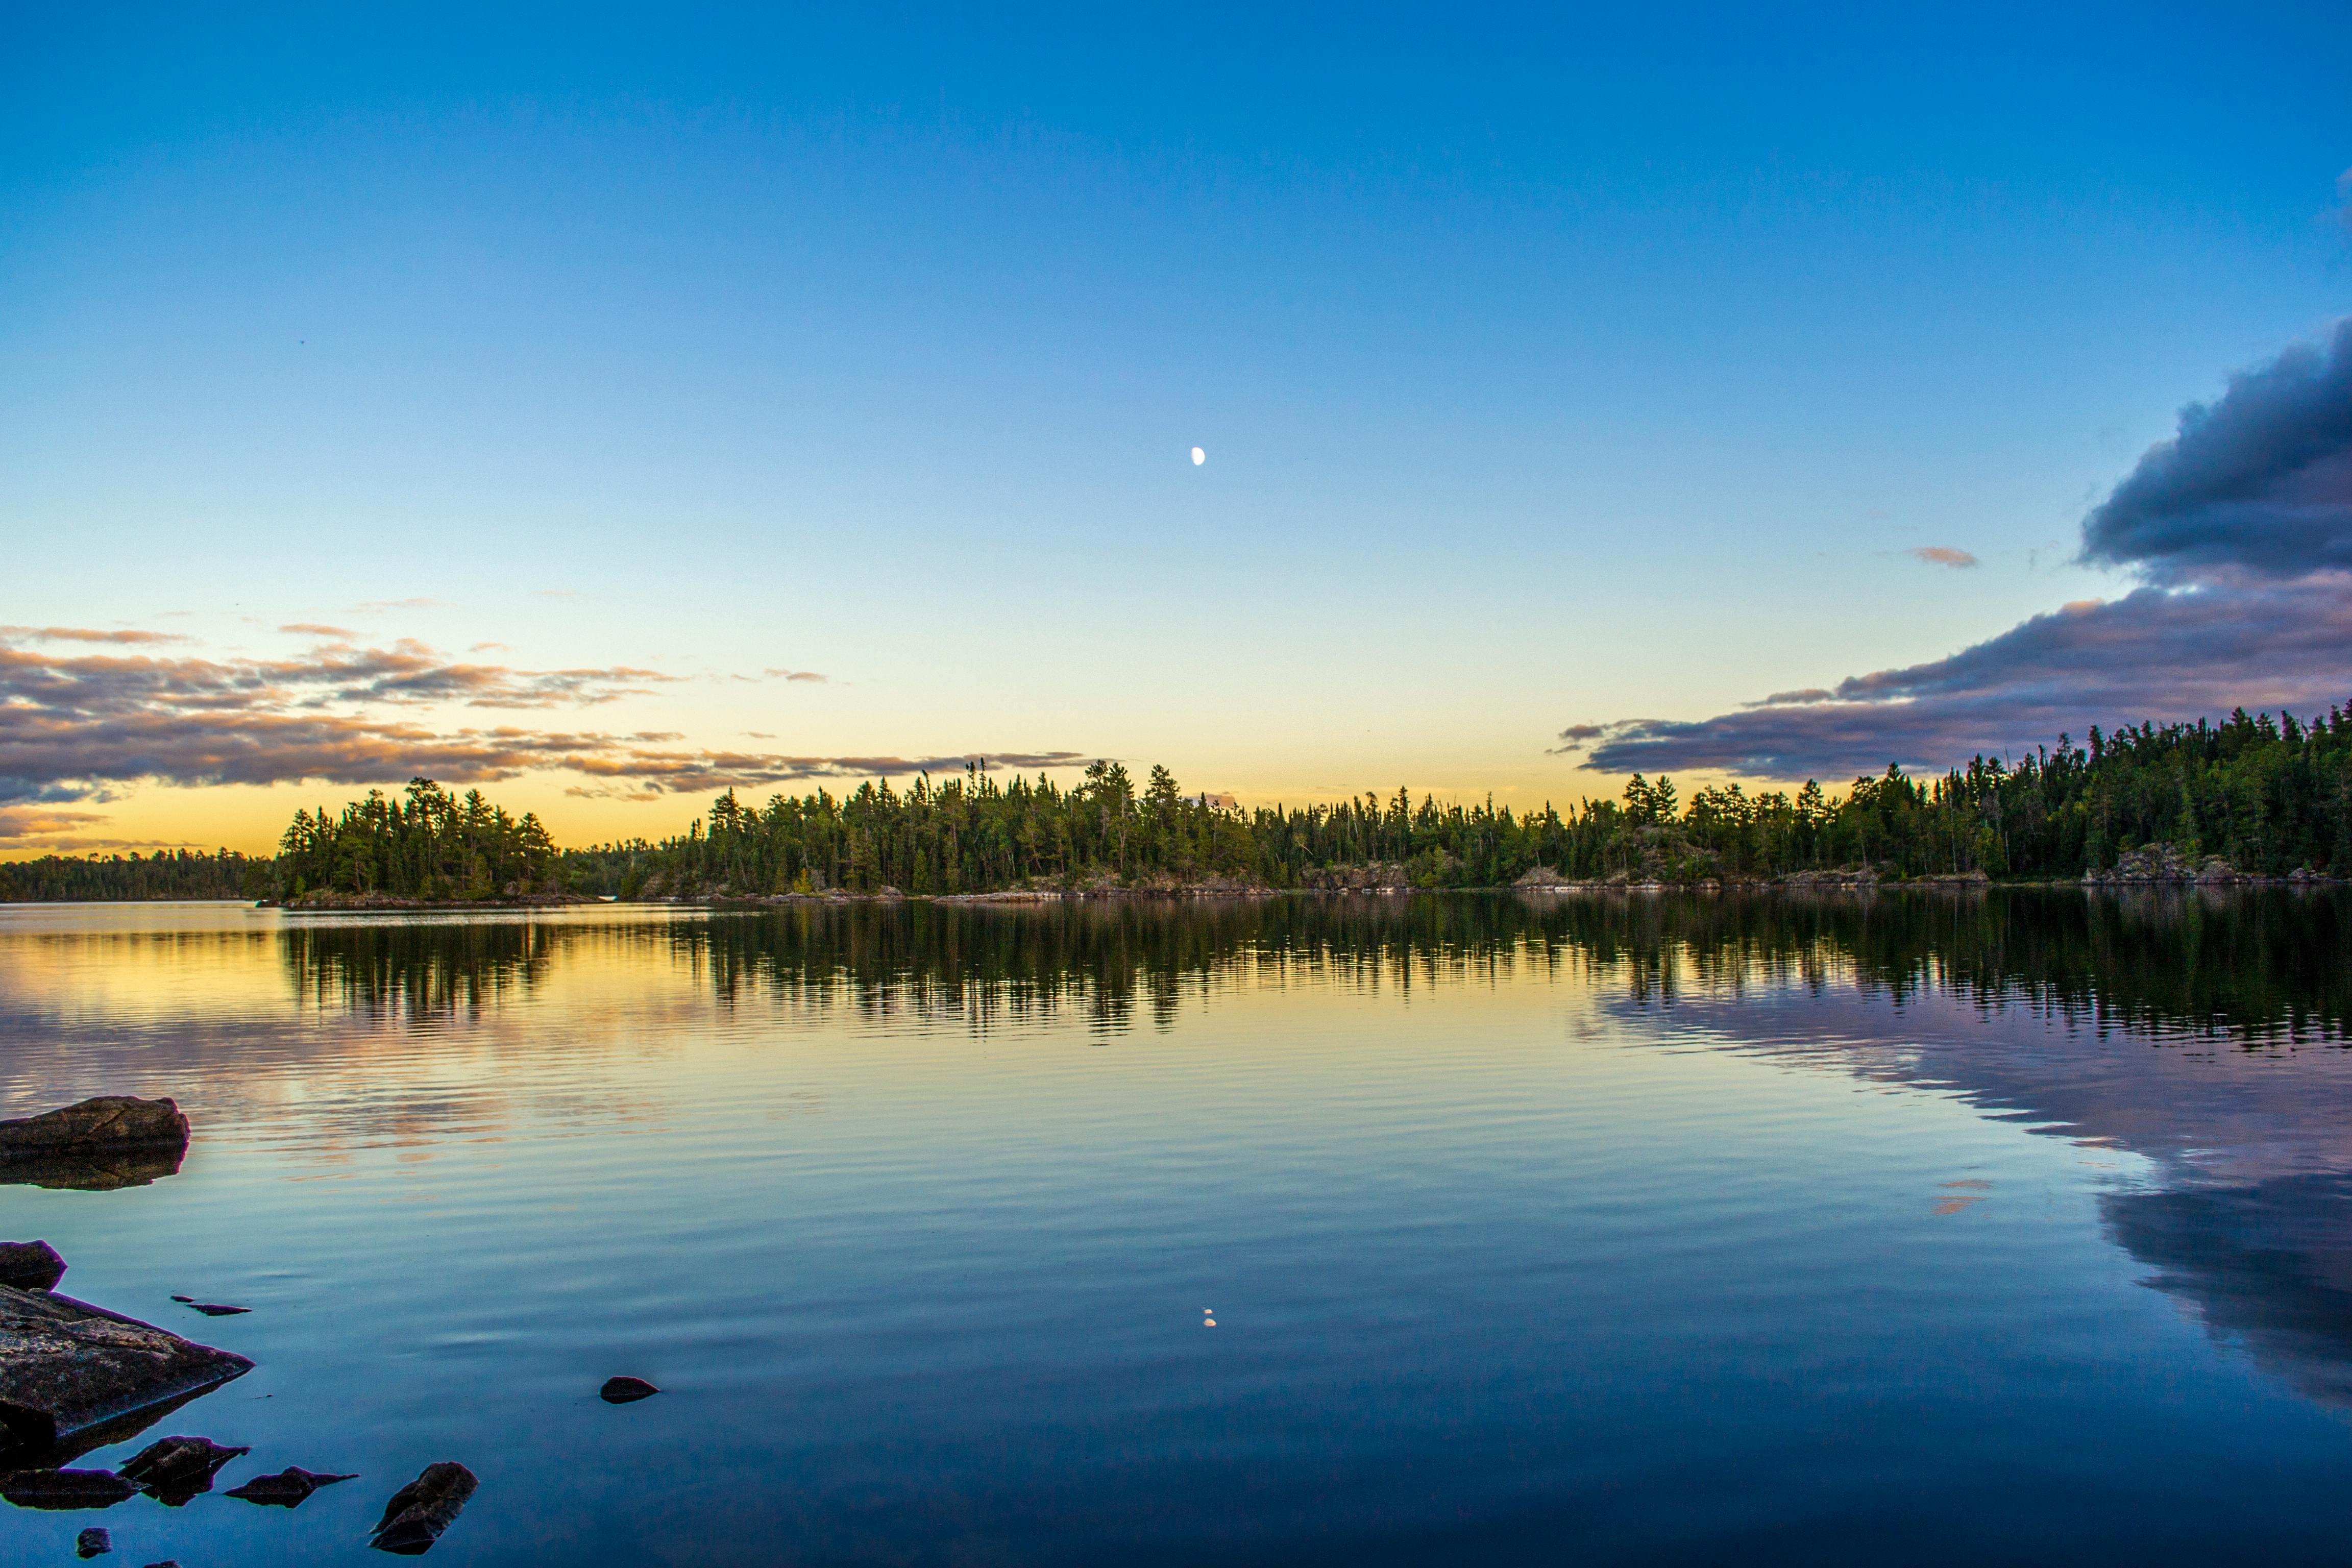 Scenic Photo Of Lake During Dawn · Free Stock Photo